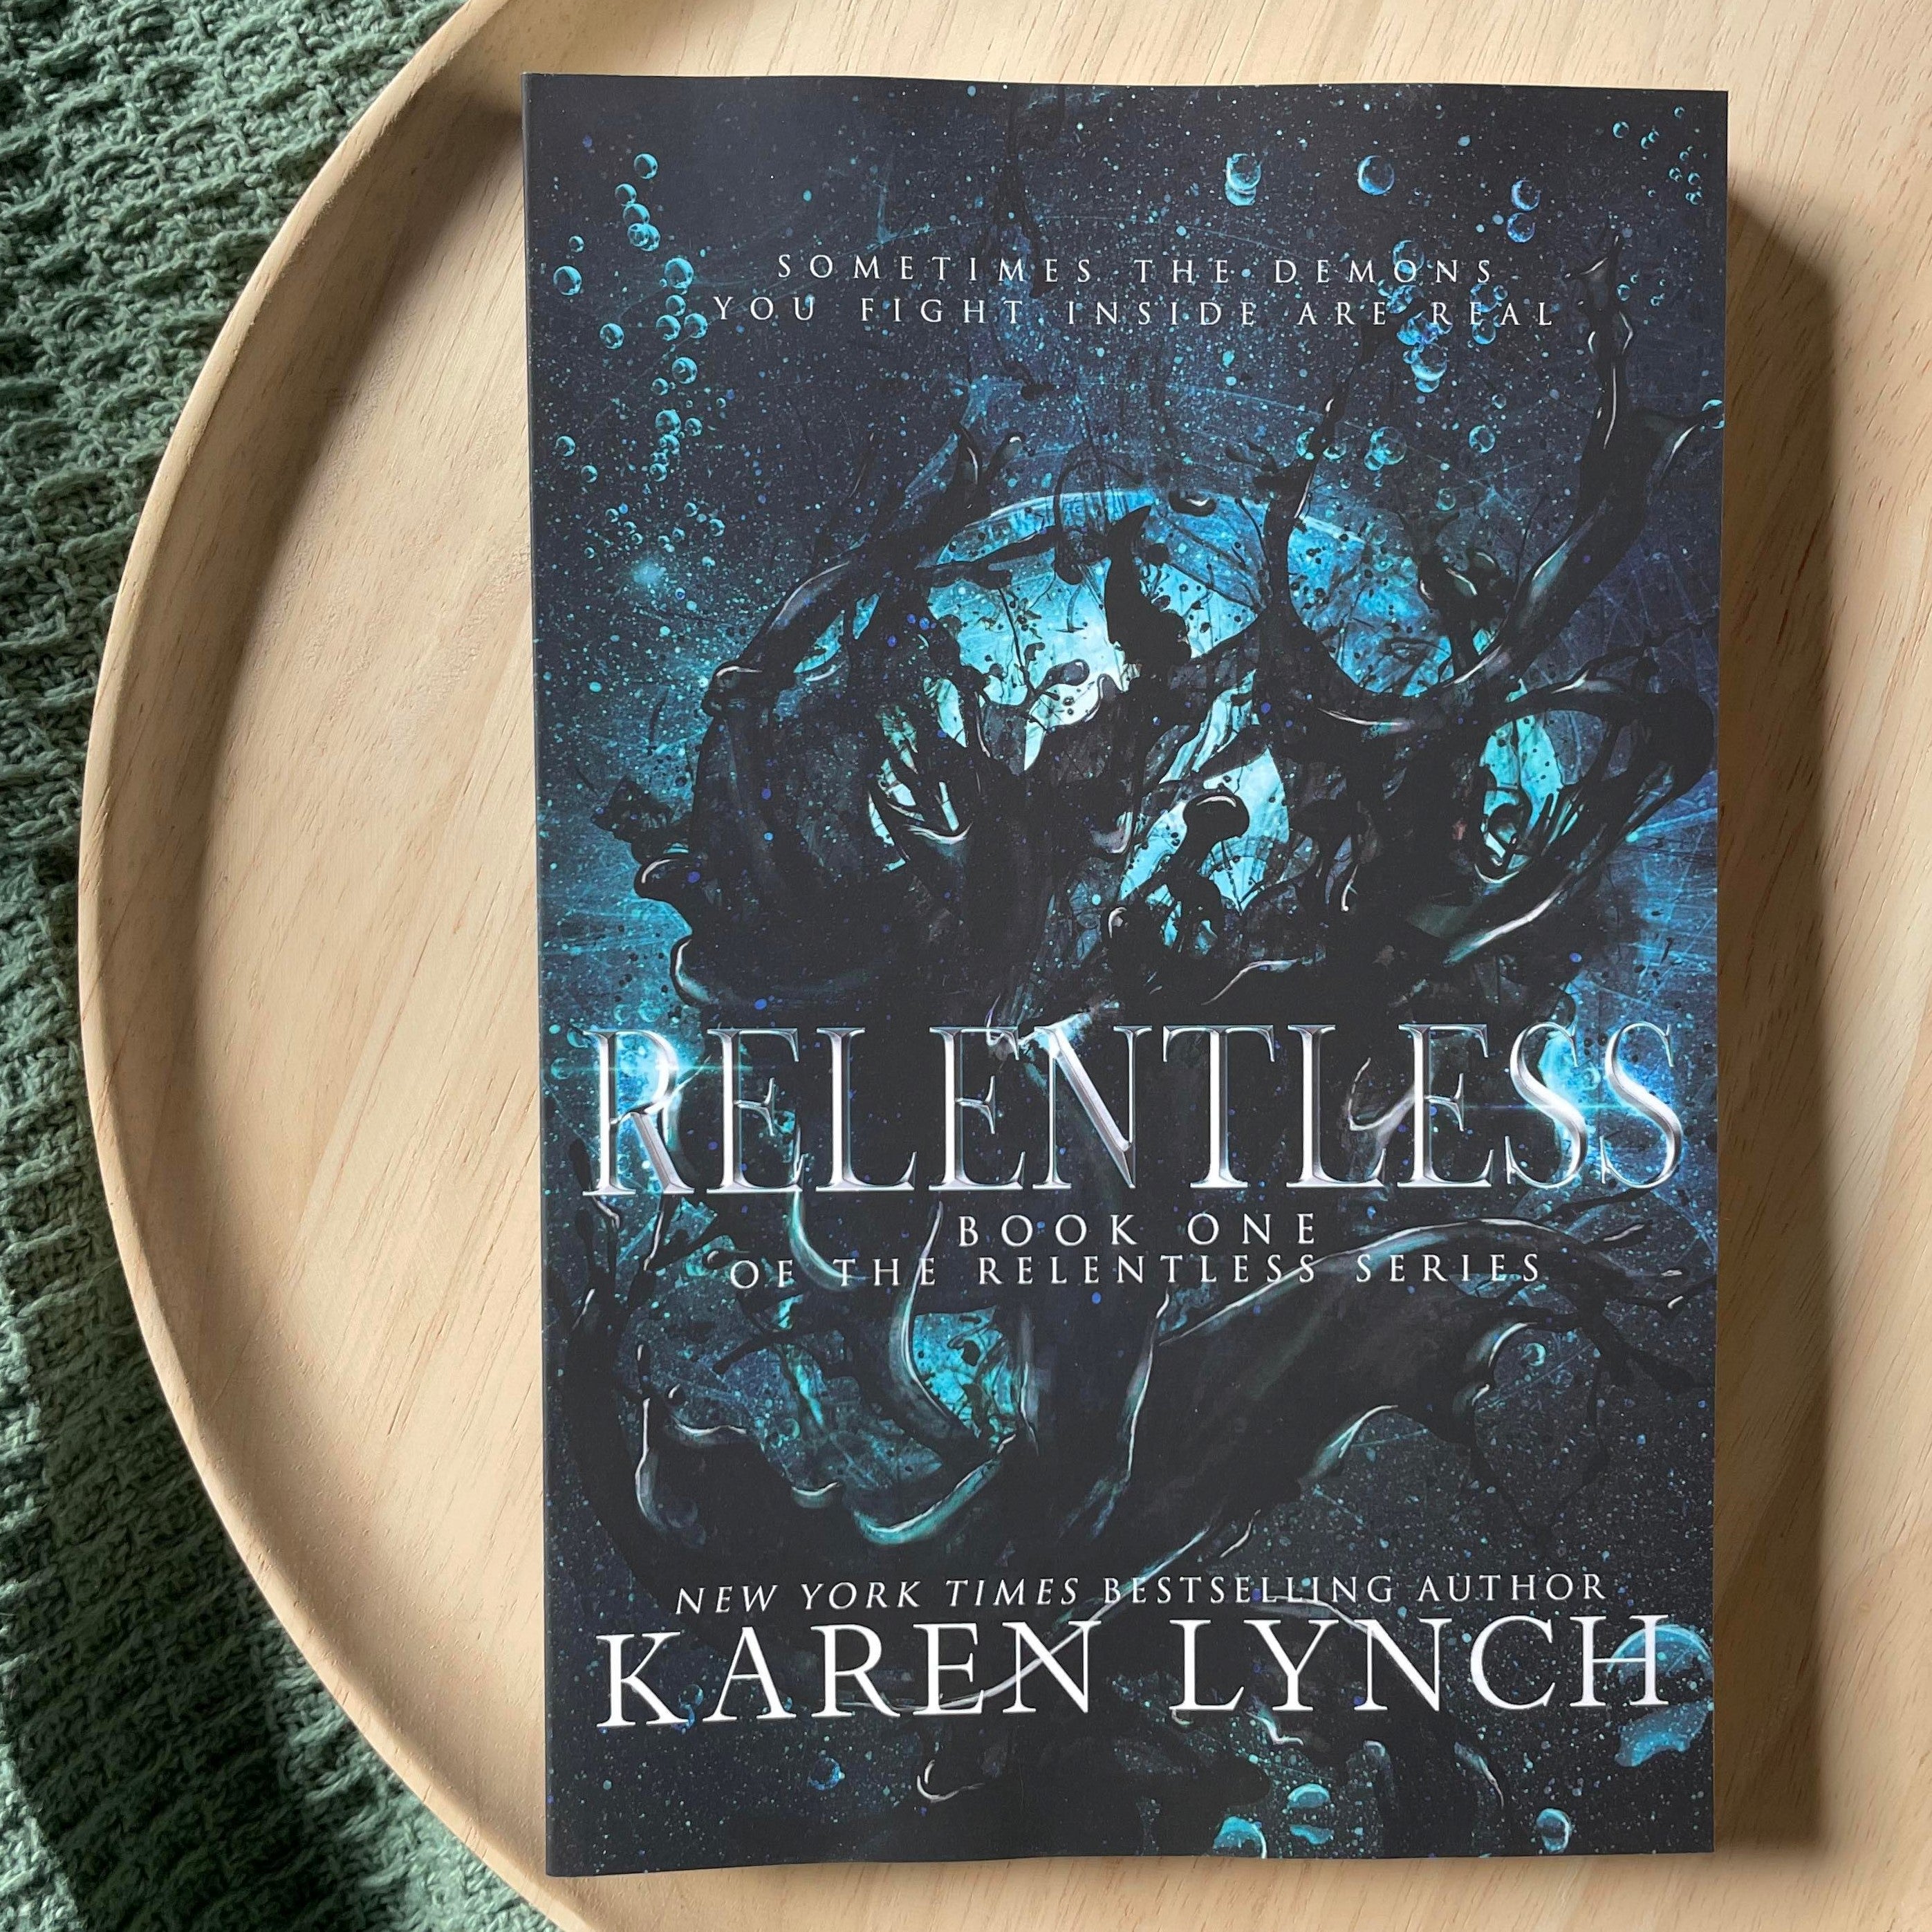 Relentless series by Karen Lynch